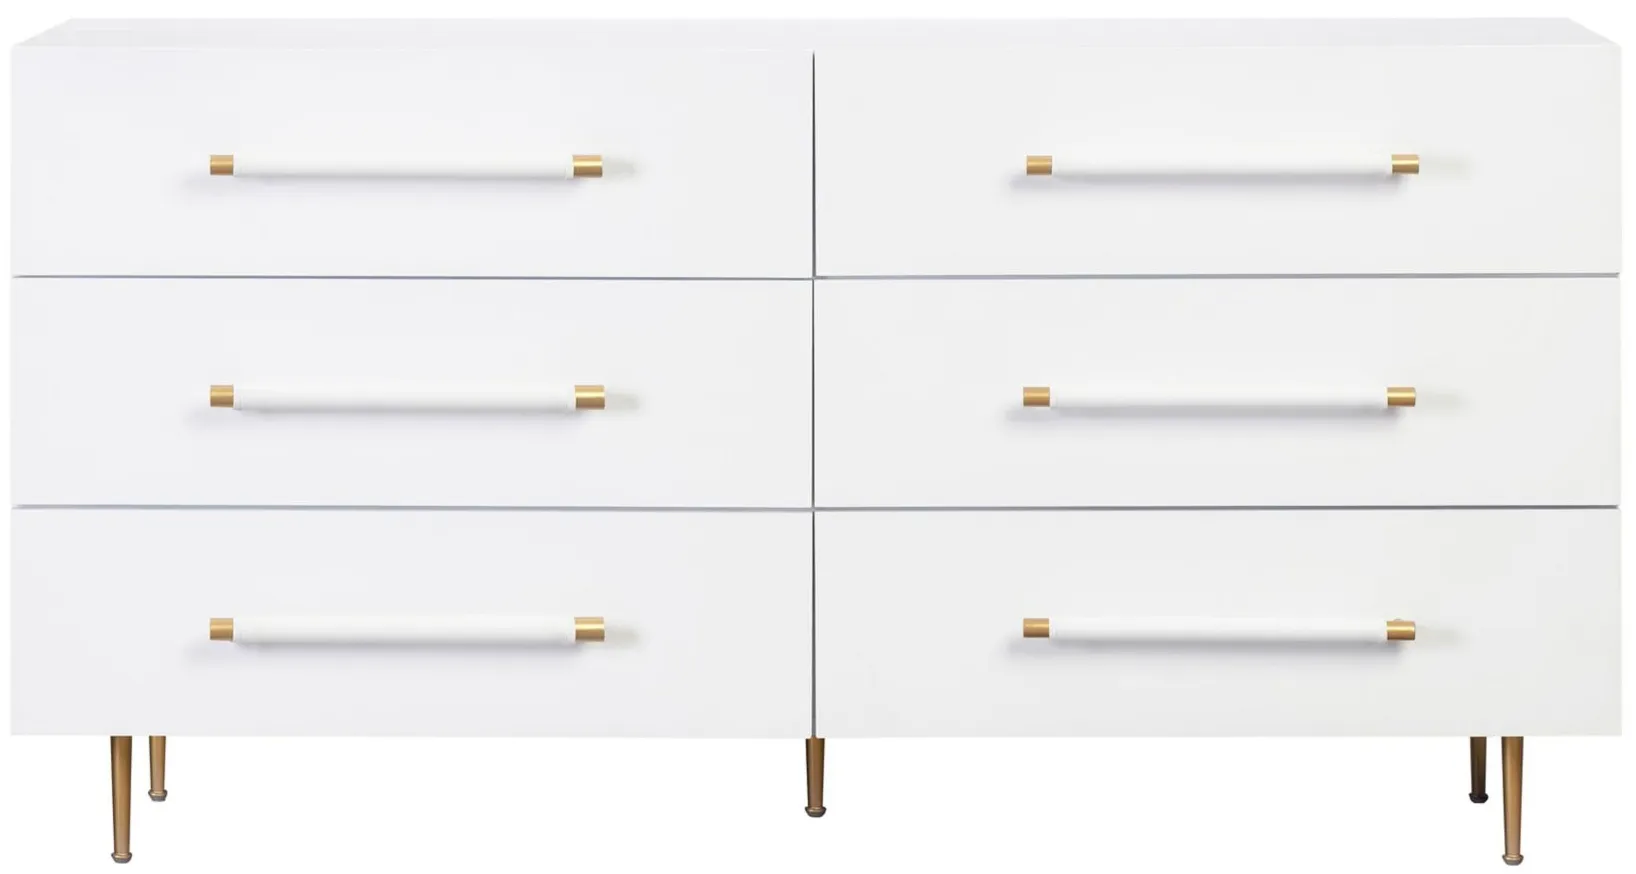 Trident 6 Drawer Dresser in White by Tov Furniture